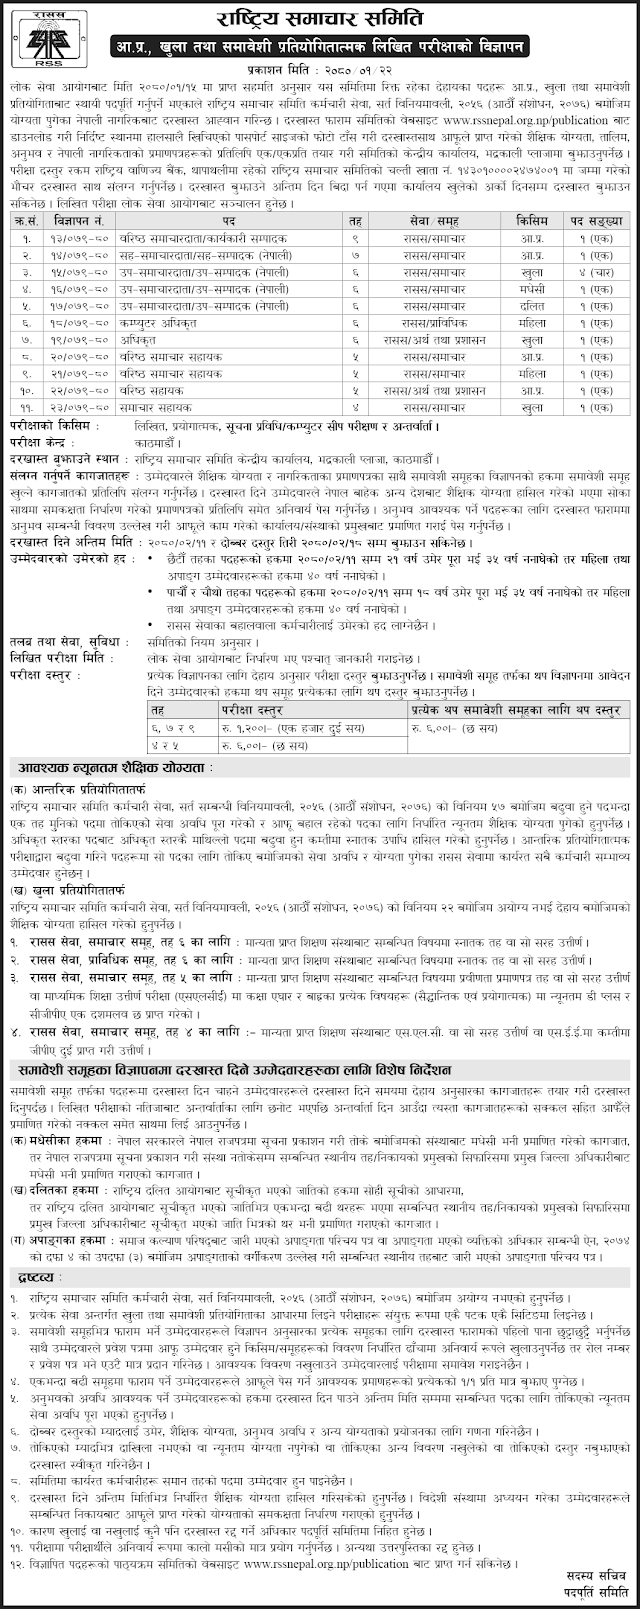 Vacancy from Rastriya Samachar Samiti (RSS) for Various Positions 2080